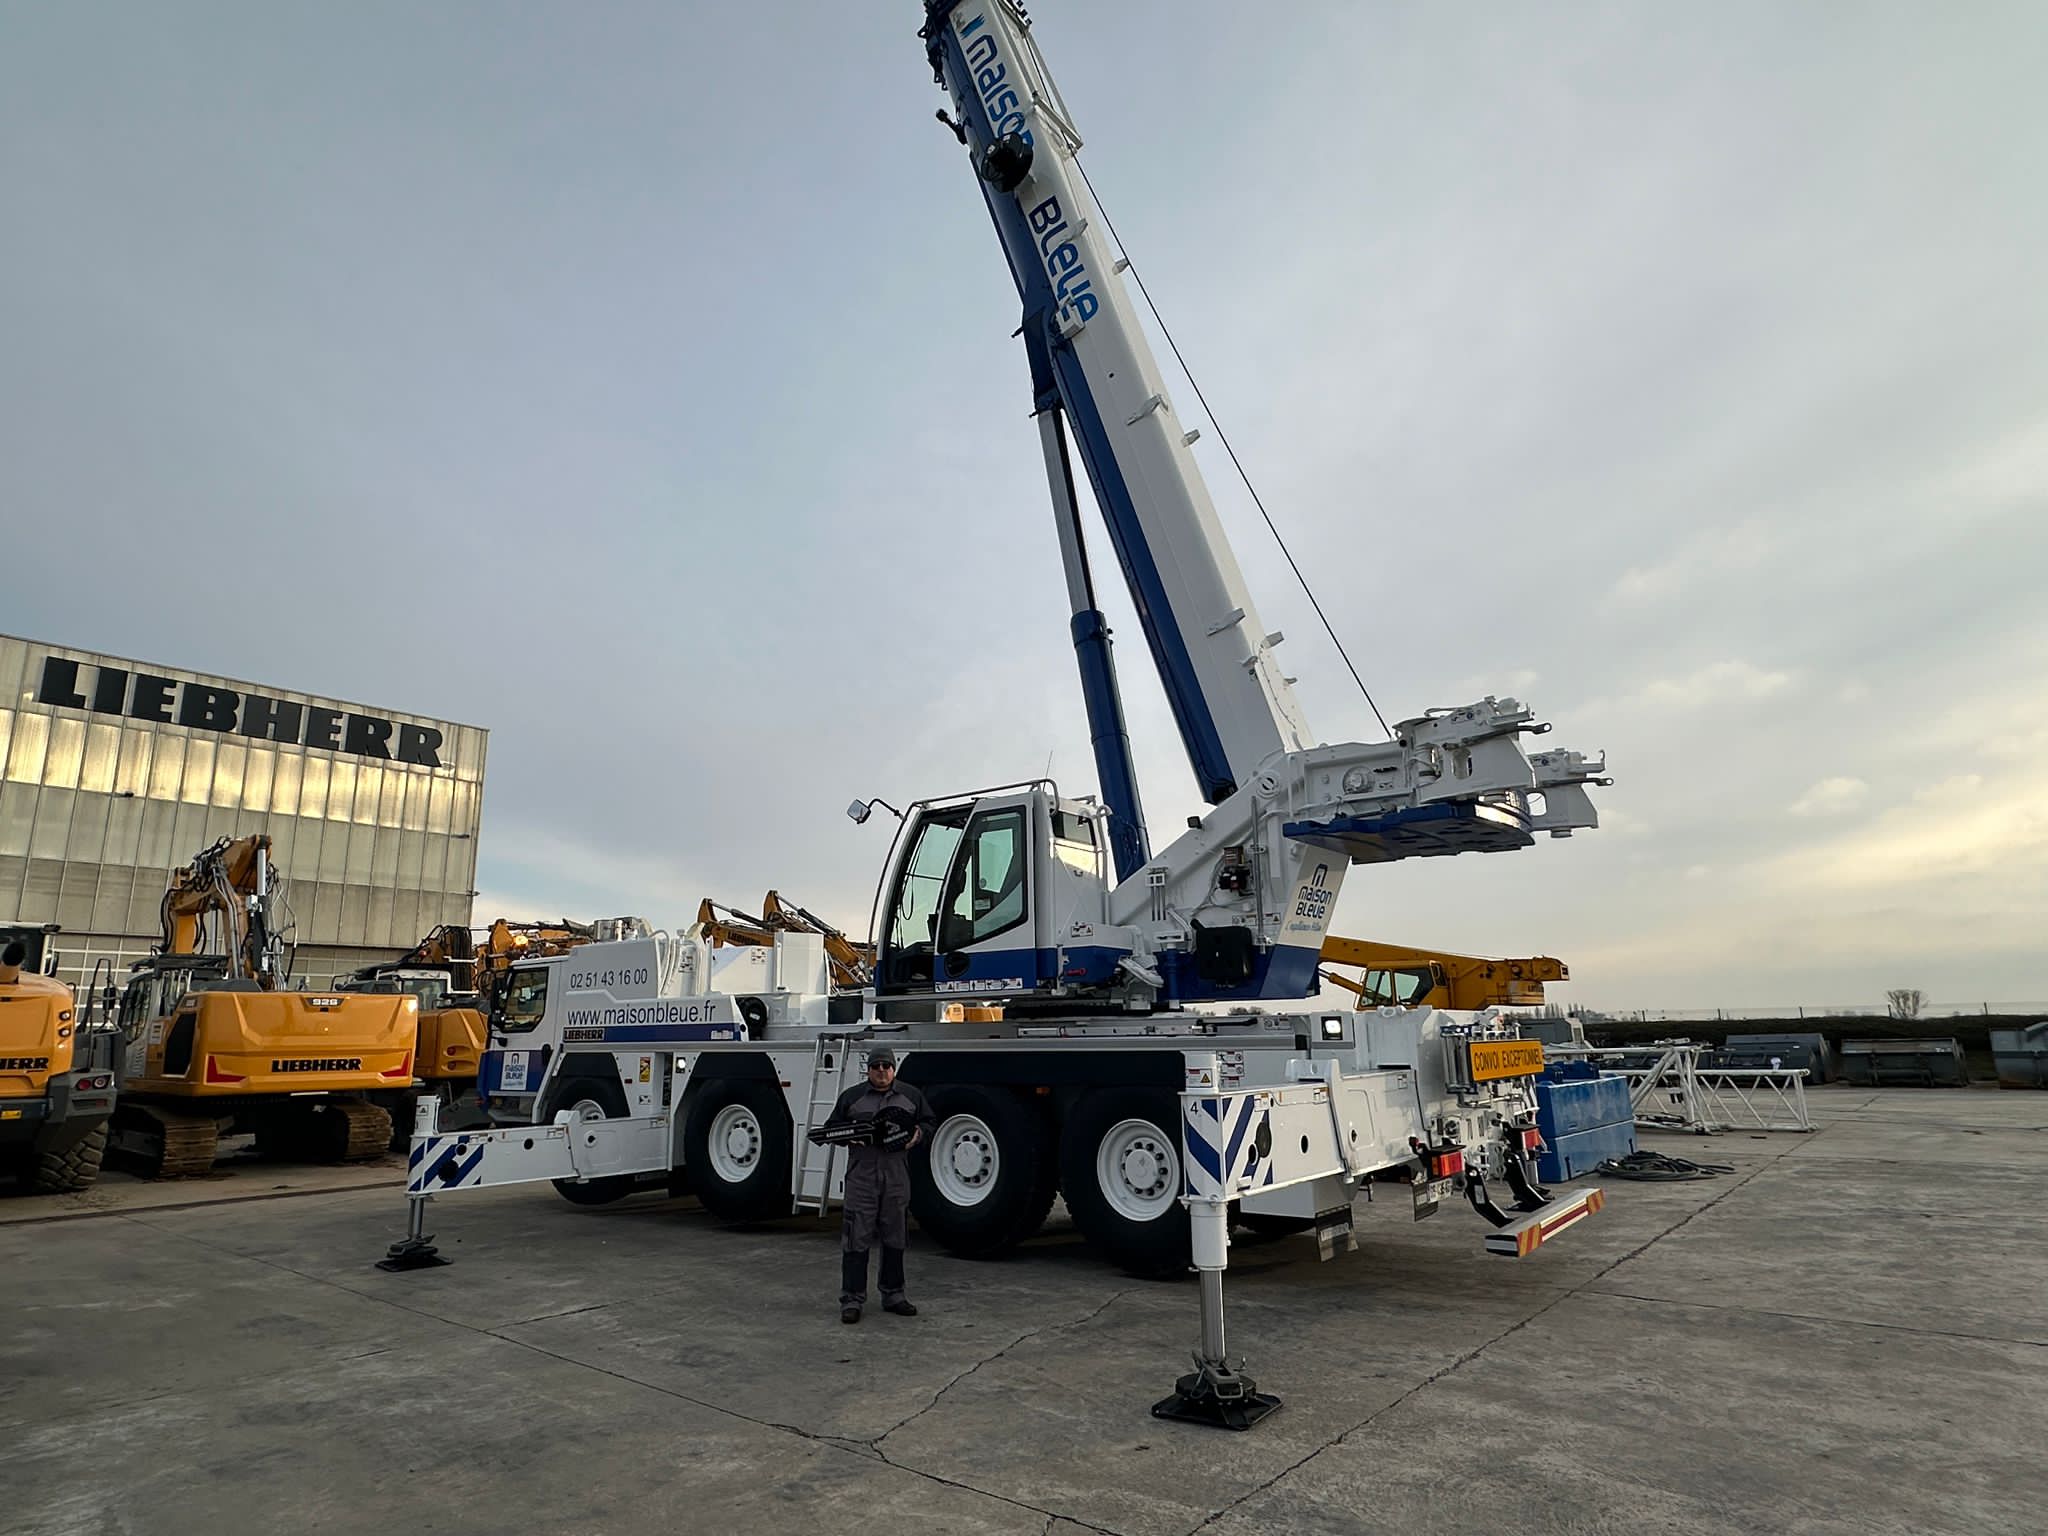 A new mobile crane for Maison Bleue